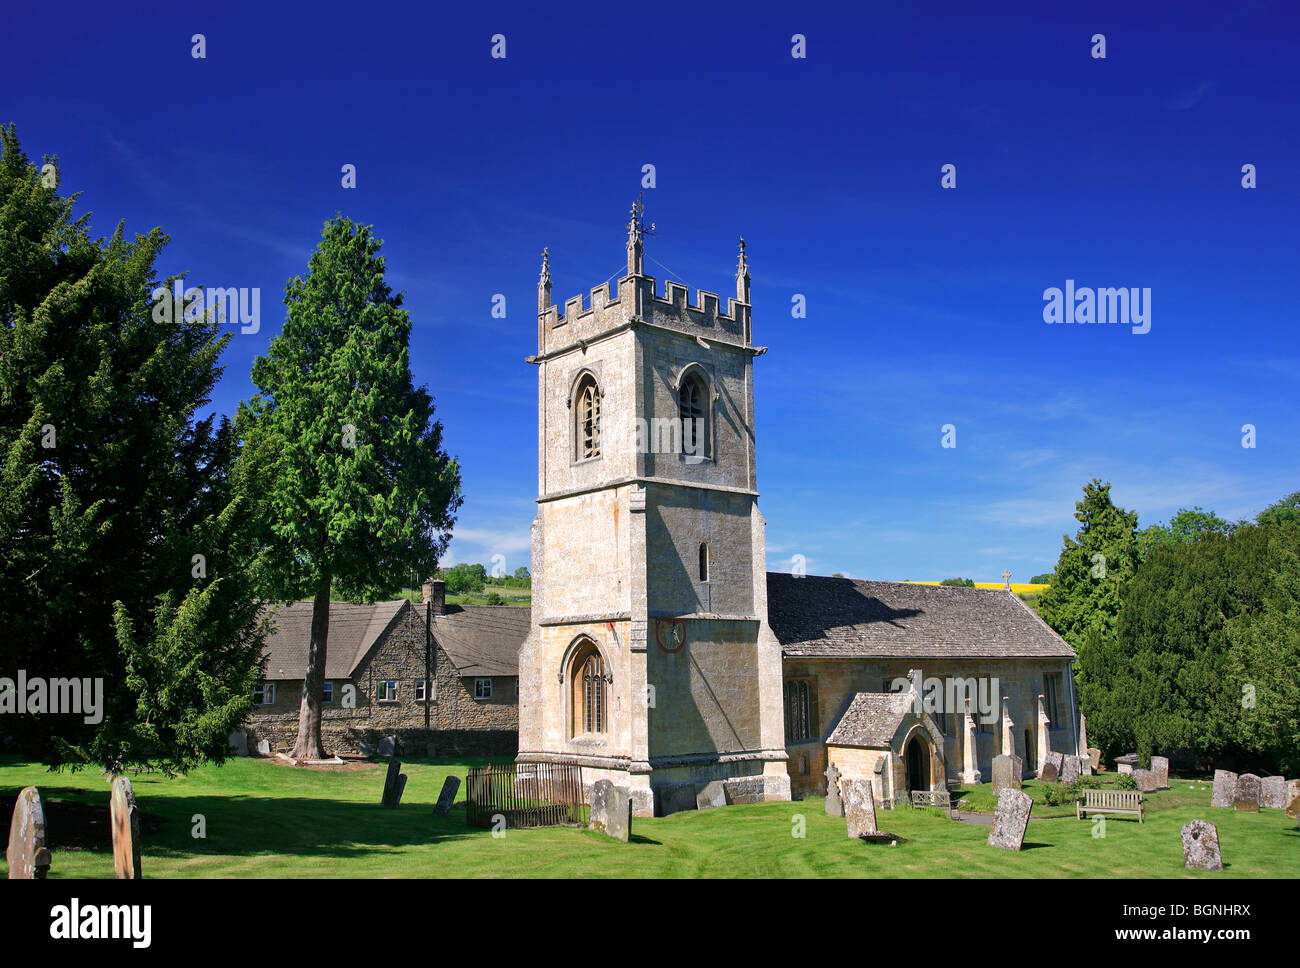 St Andrews Pfarrei Kirche Naunton Dorf Gloucestershire Cotswolds UK Stockfoto